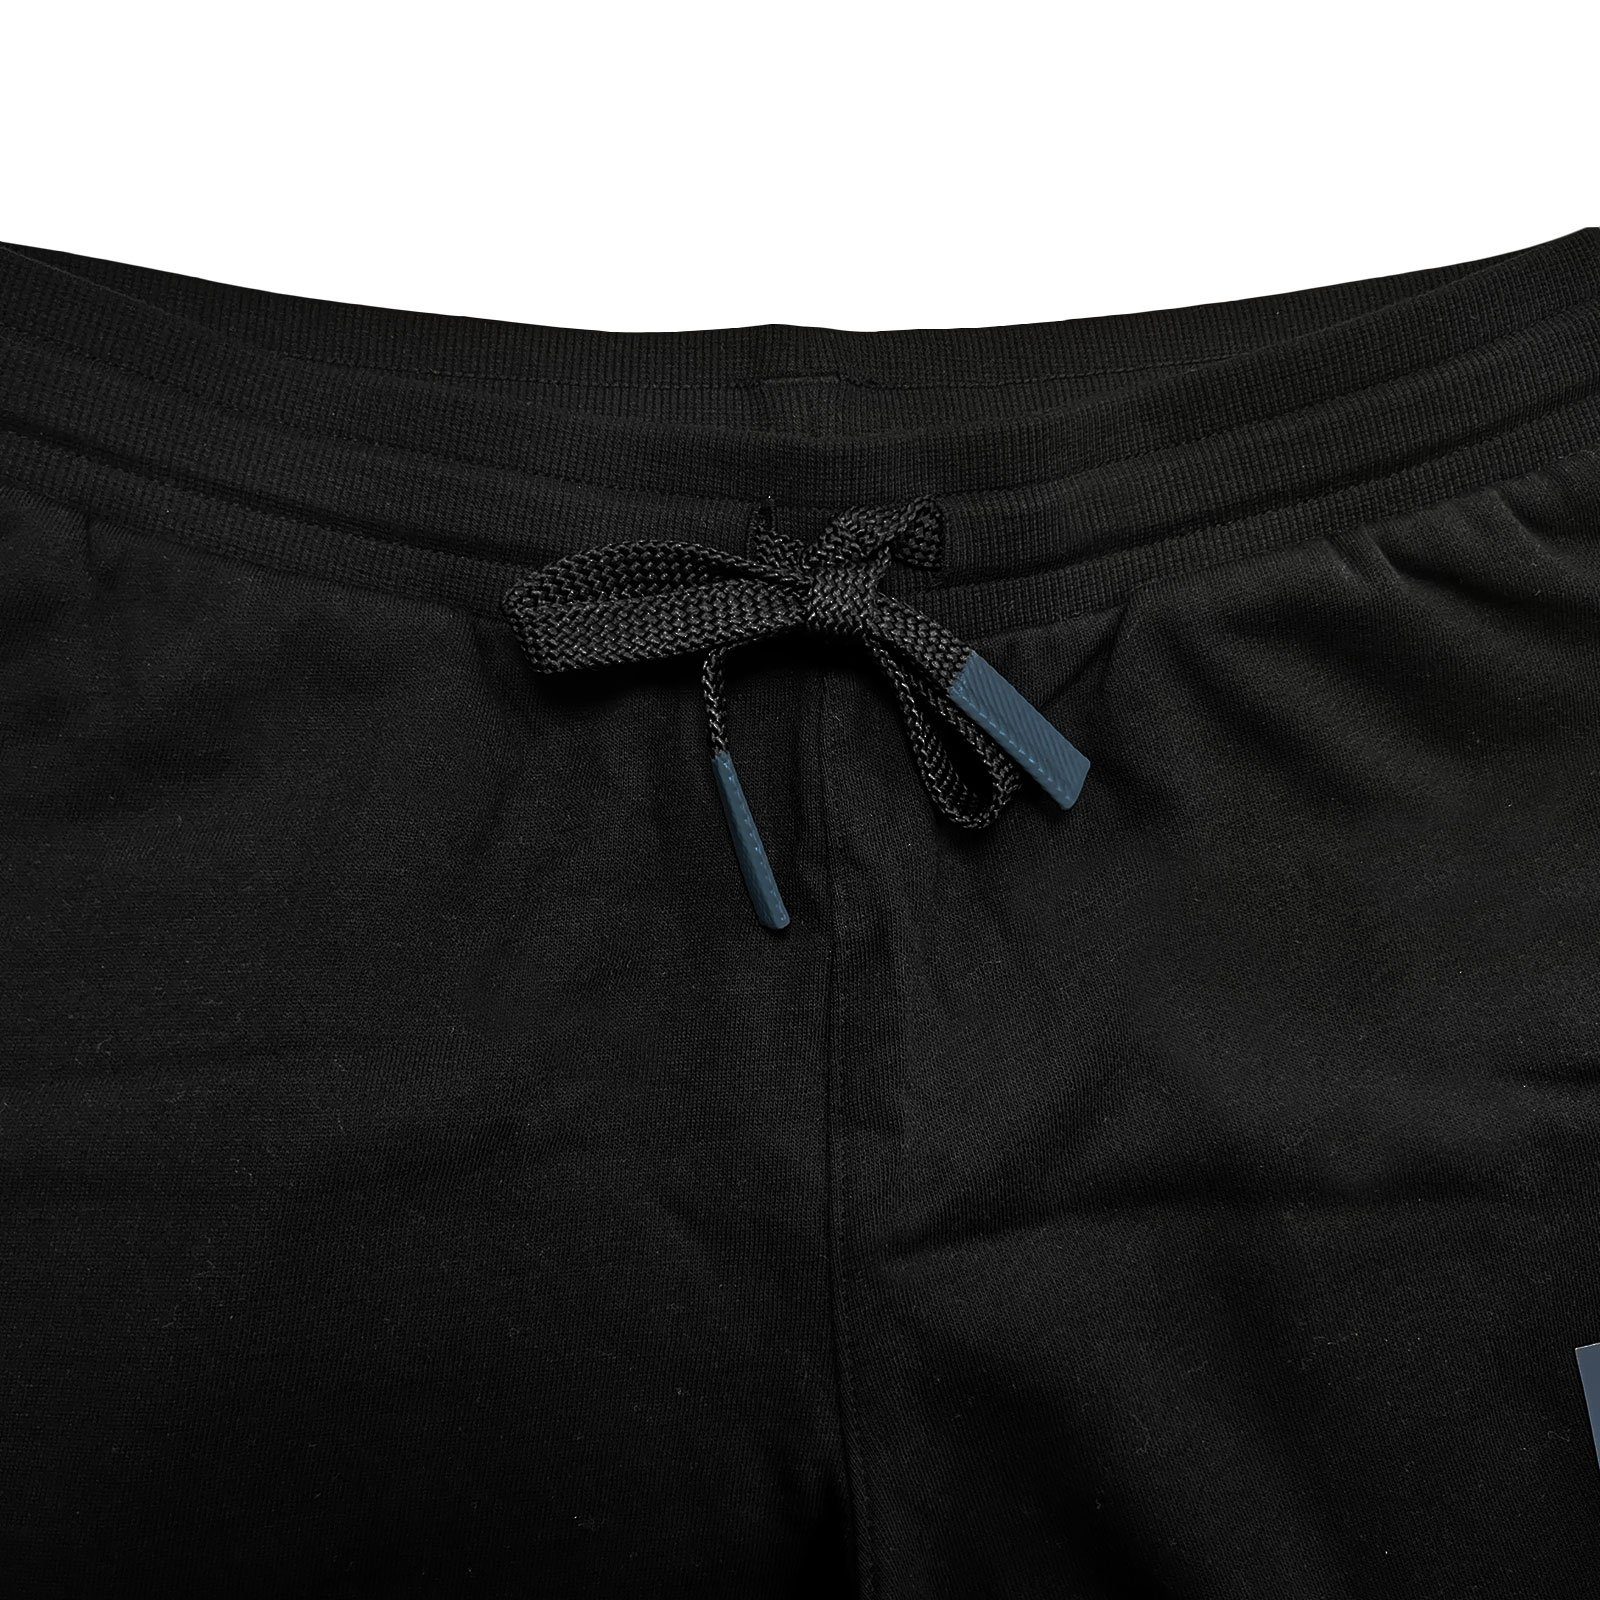 Sweat black Armani 00020 Trousers Emporio Loungehose innen angeraut weich long